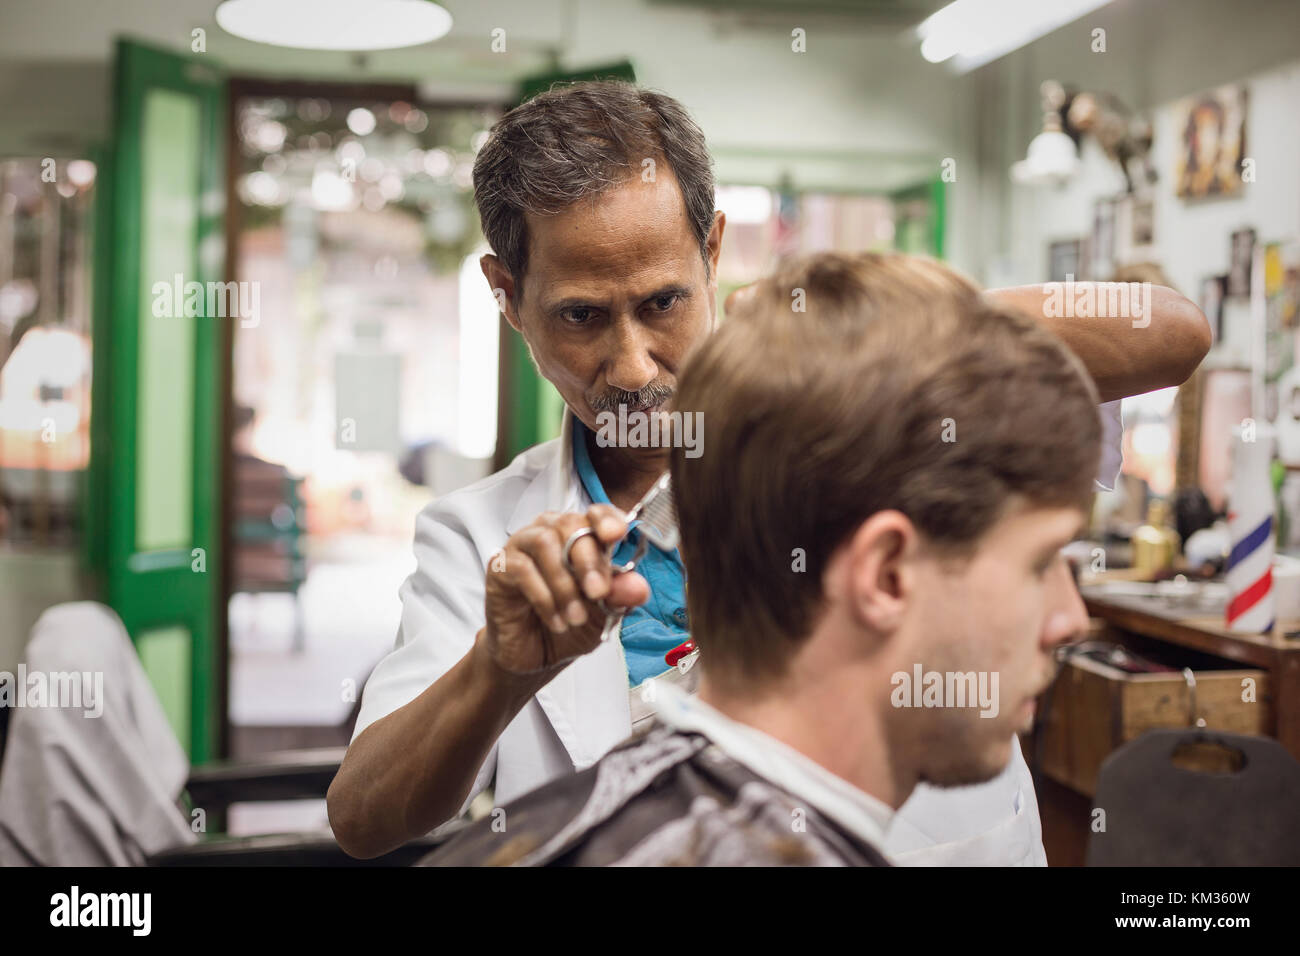 Malayan Barber At Work Stock Photo